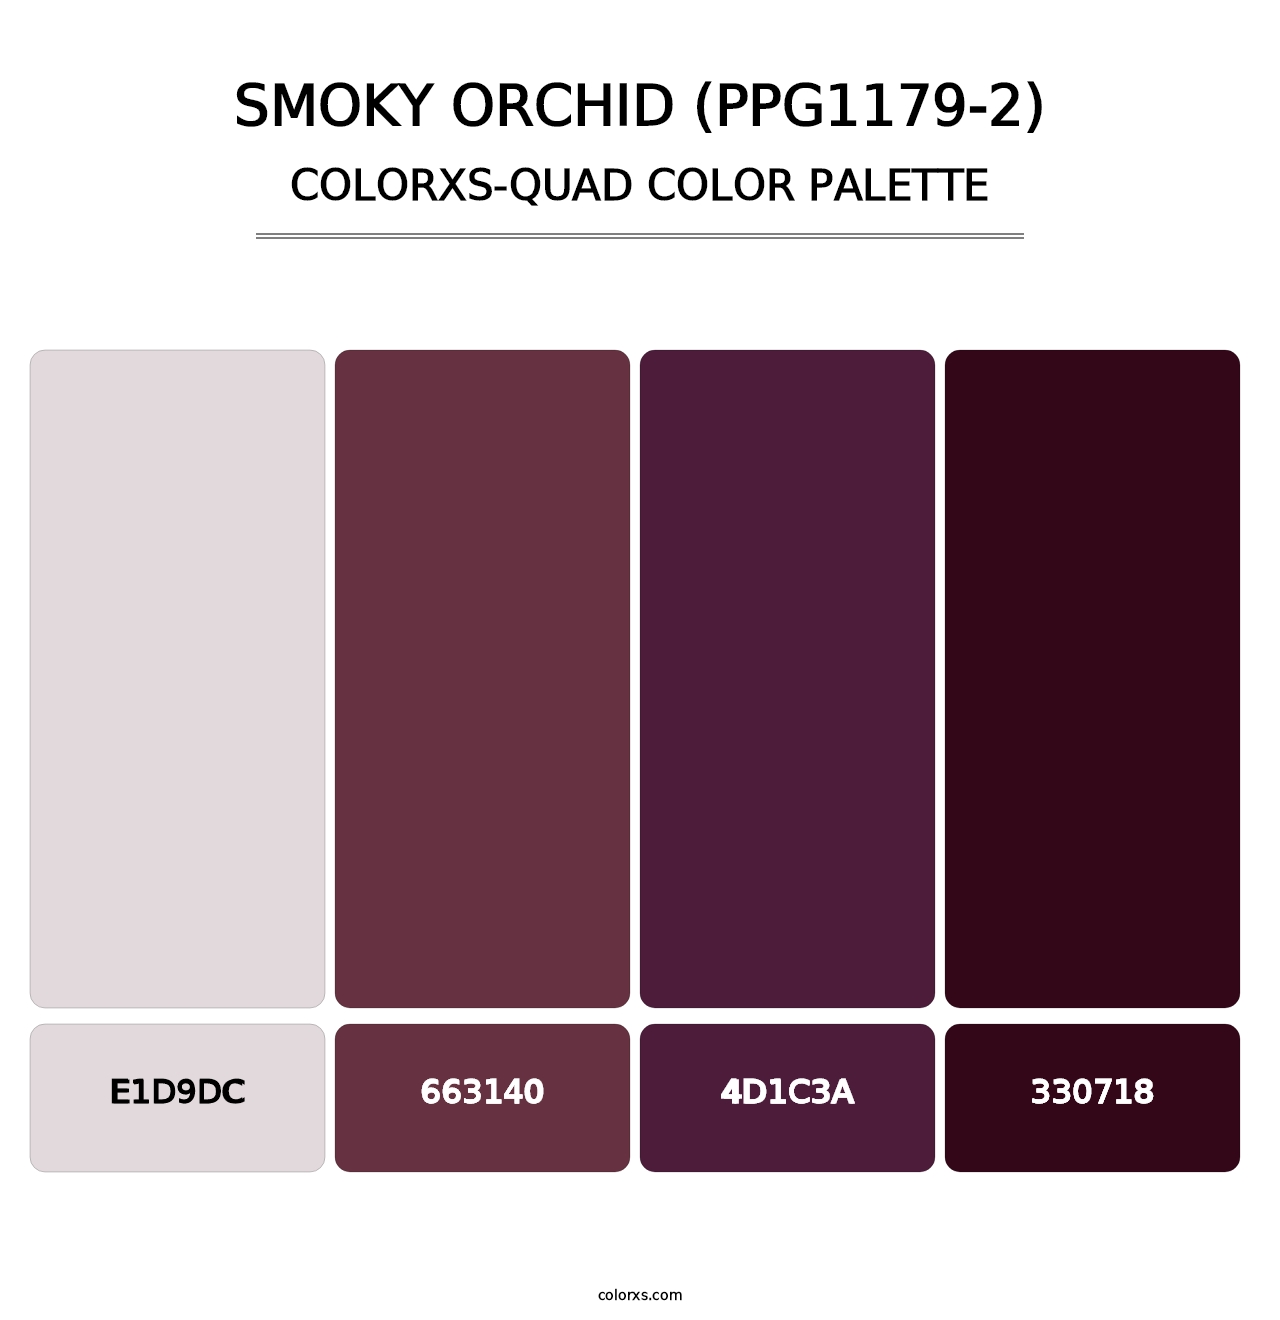 Smoky Orchid (PPG1179-2) - Colorxs Quad Palette